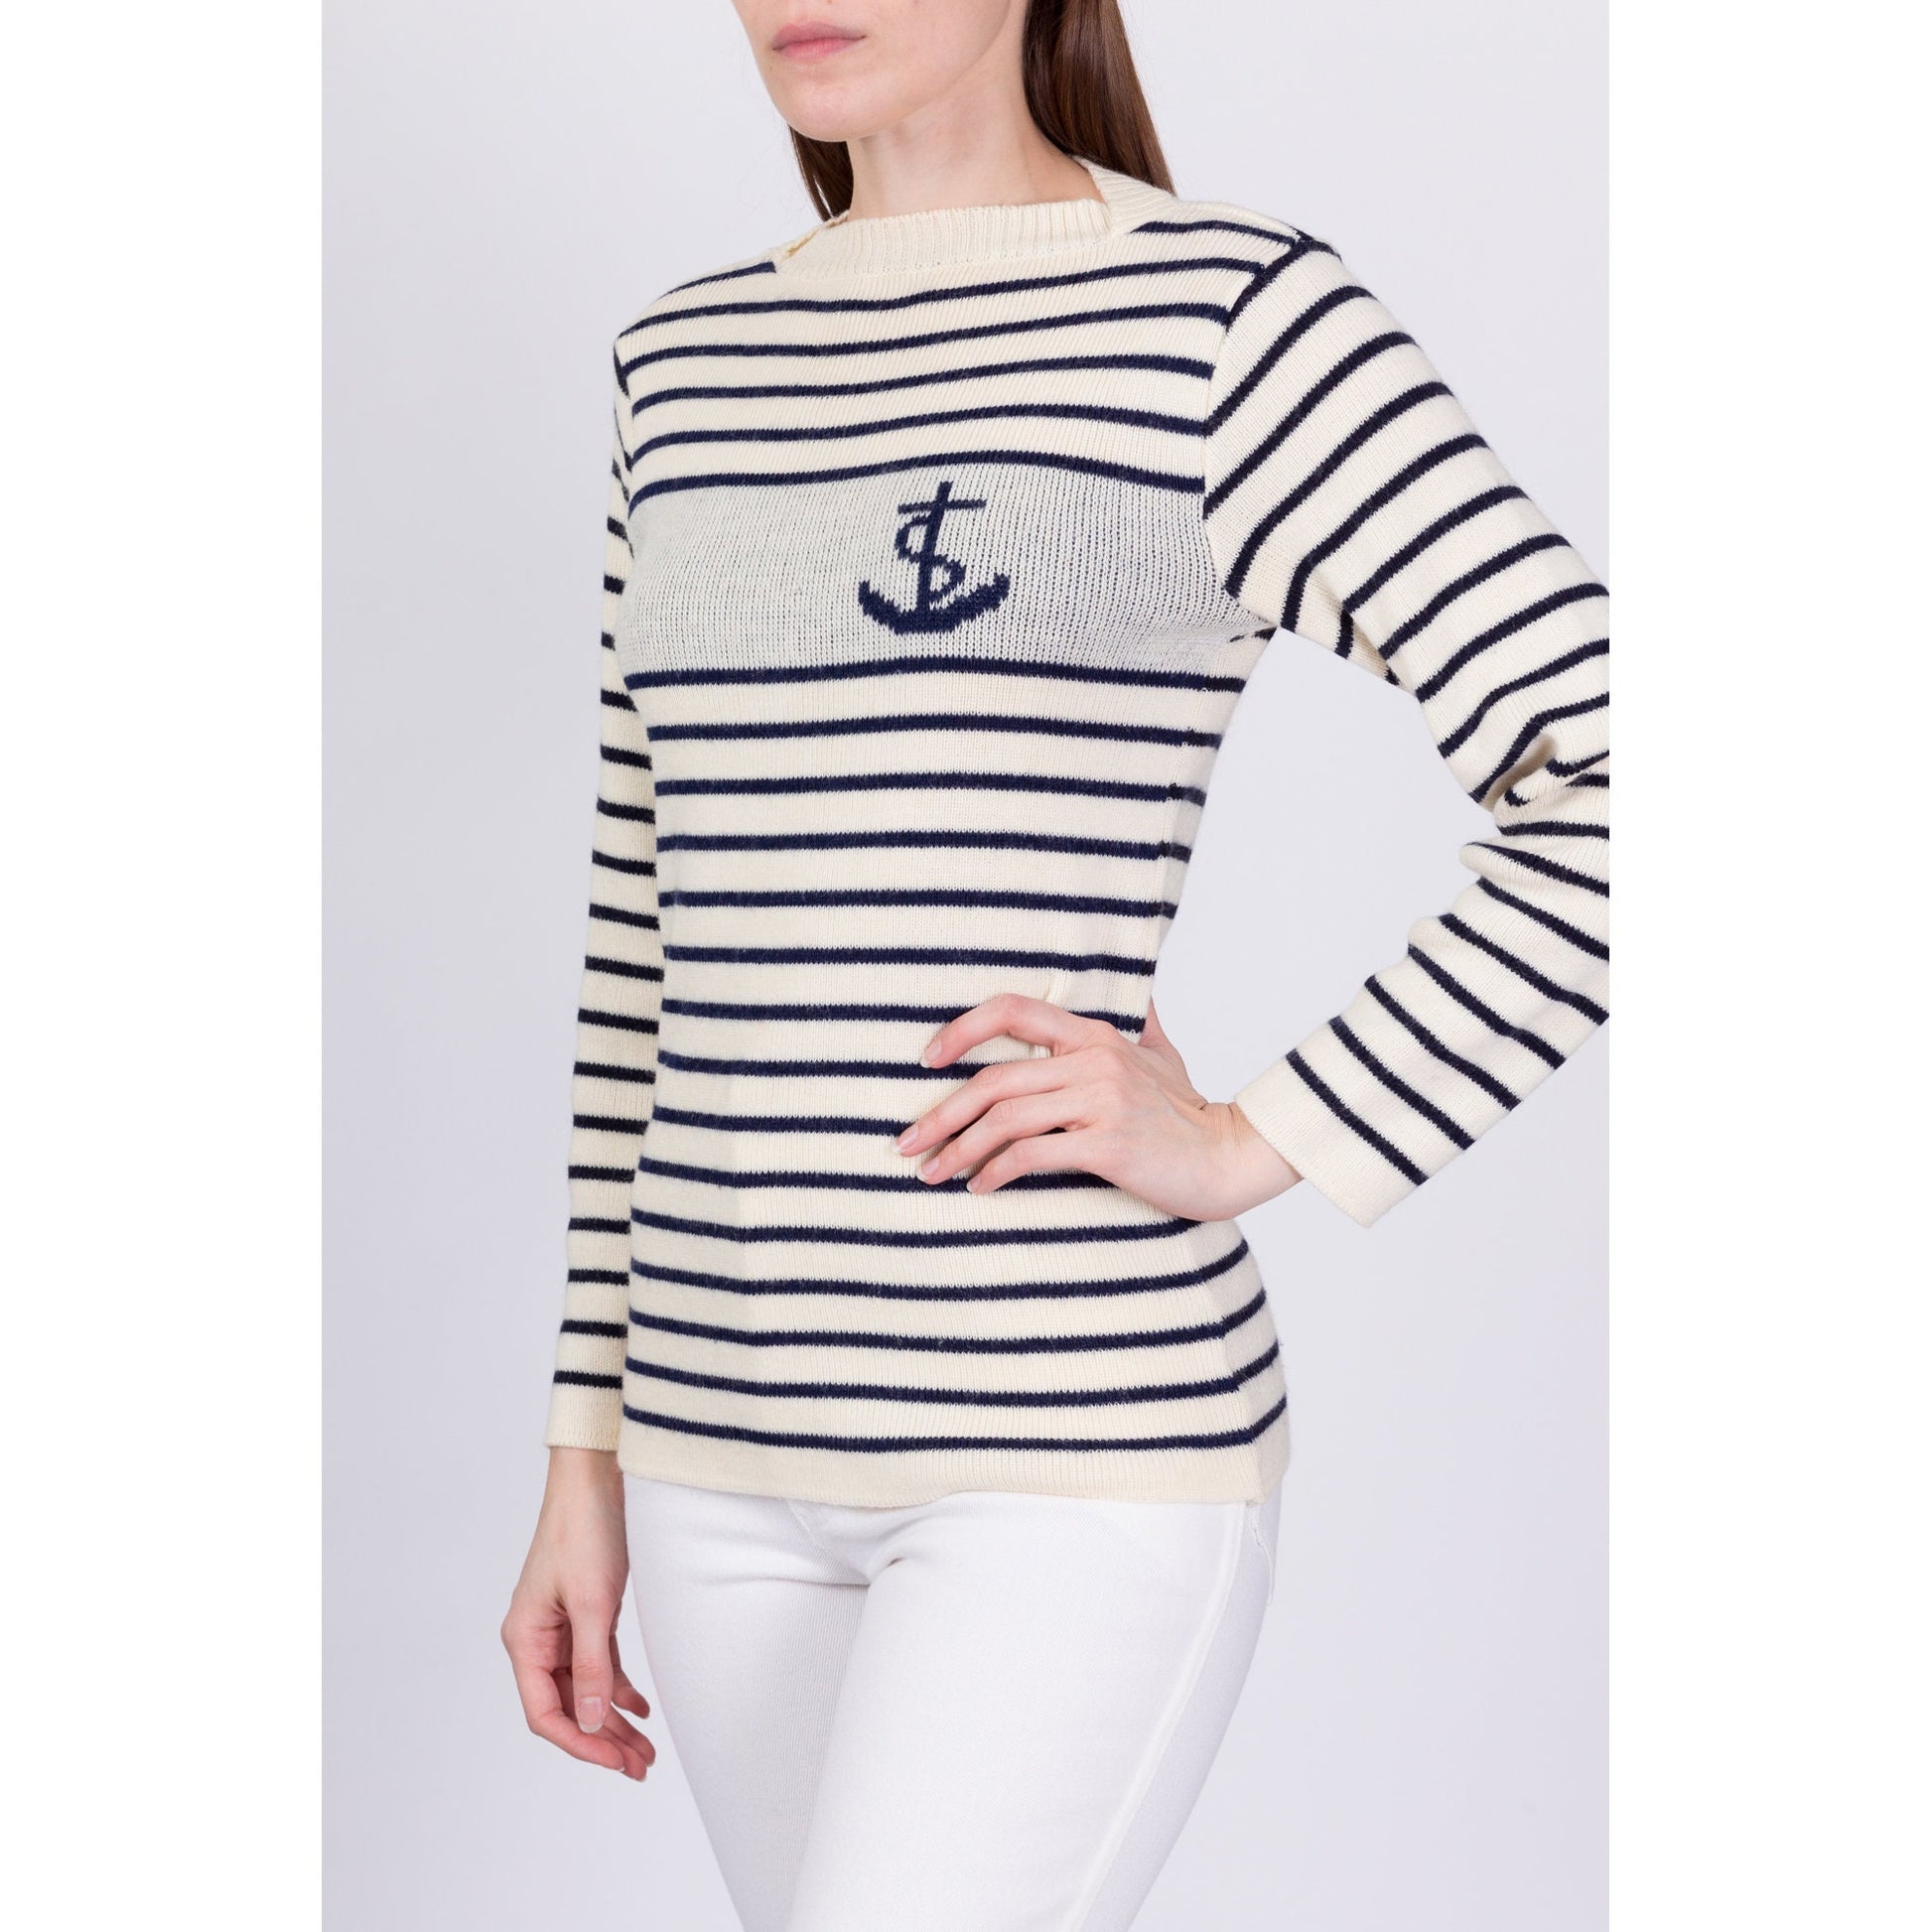 Vintage Breton Sailor Striped Boat Neck Sweater - Small 